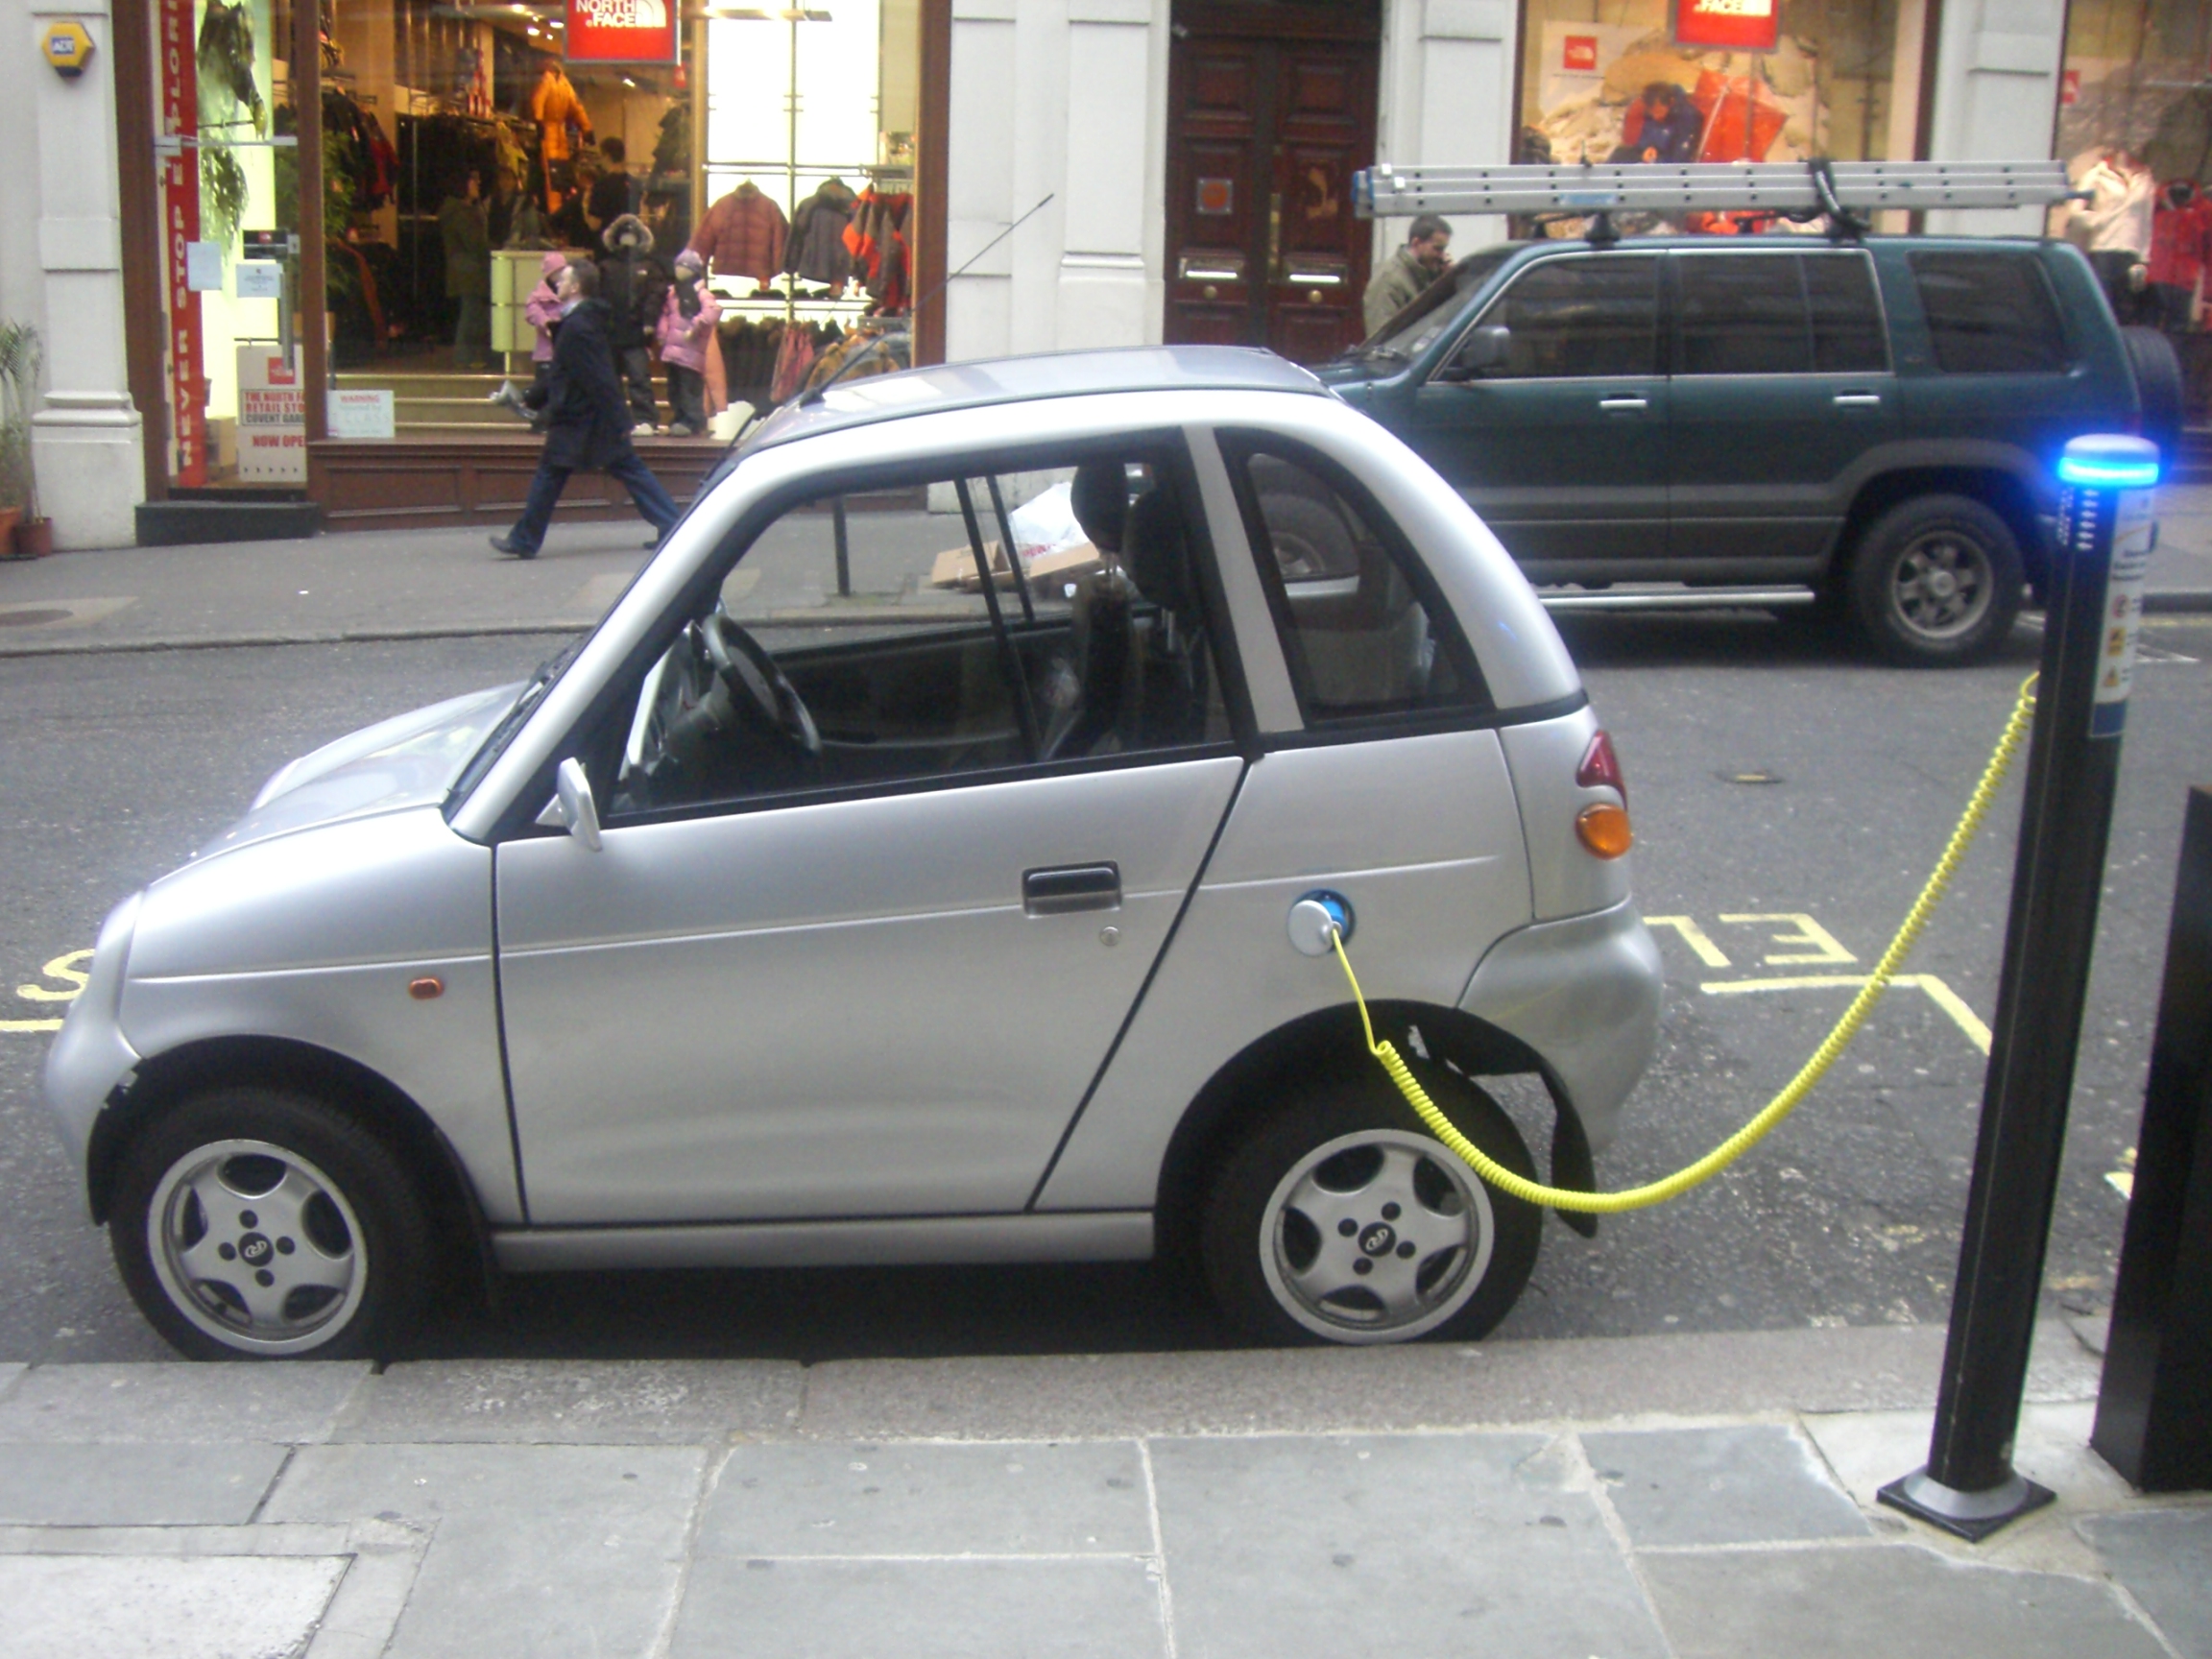 electric-car.jpg